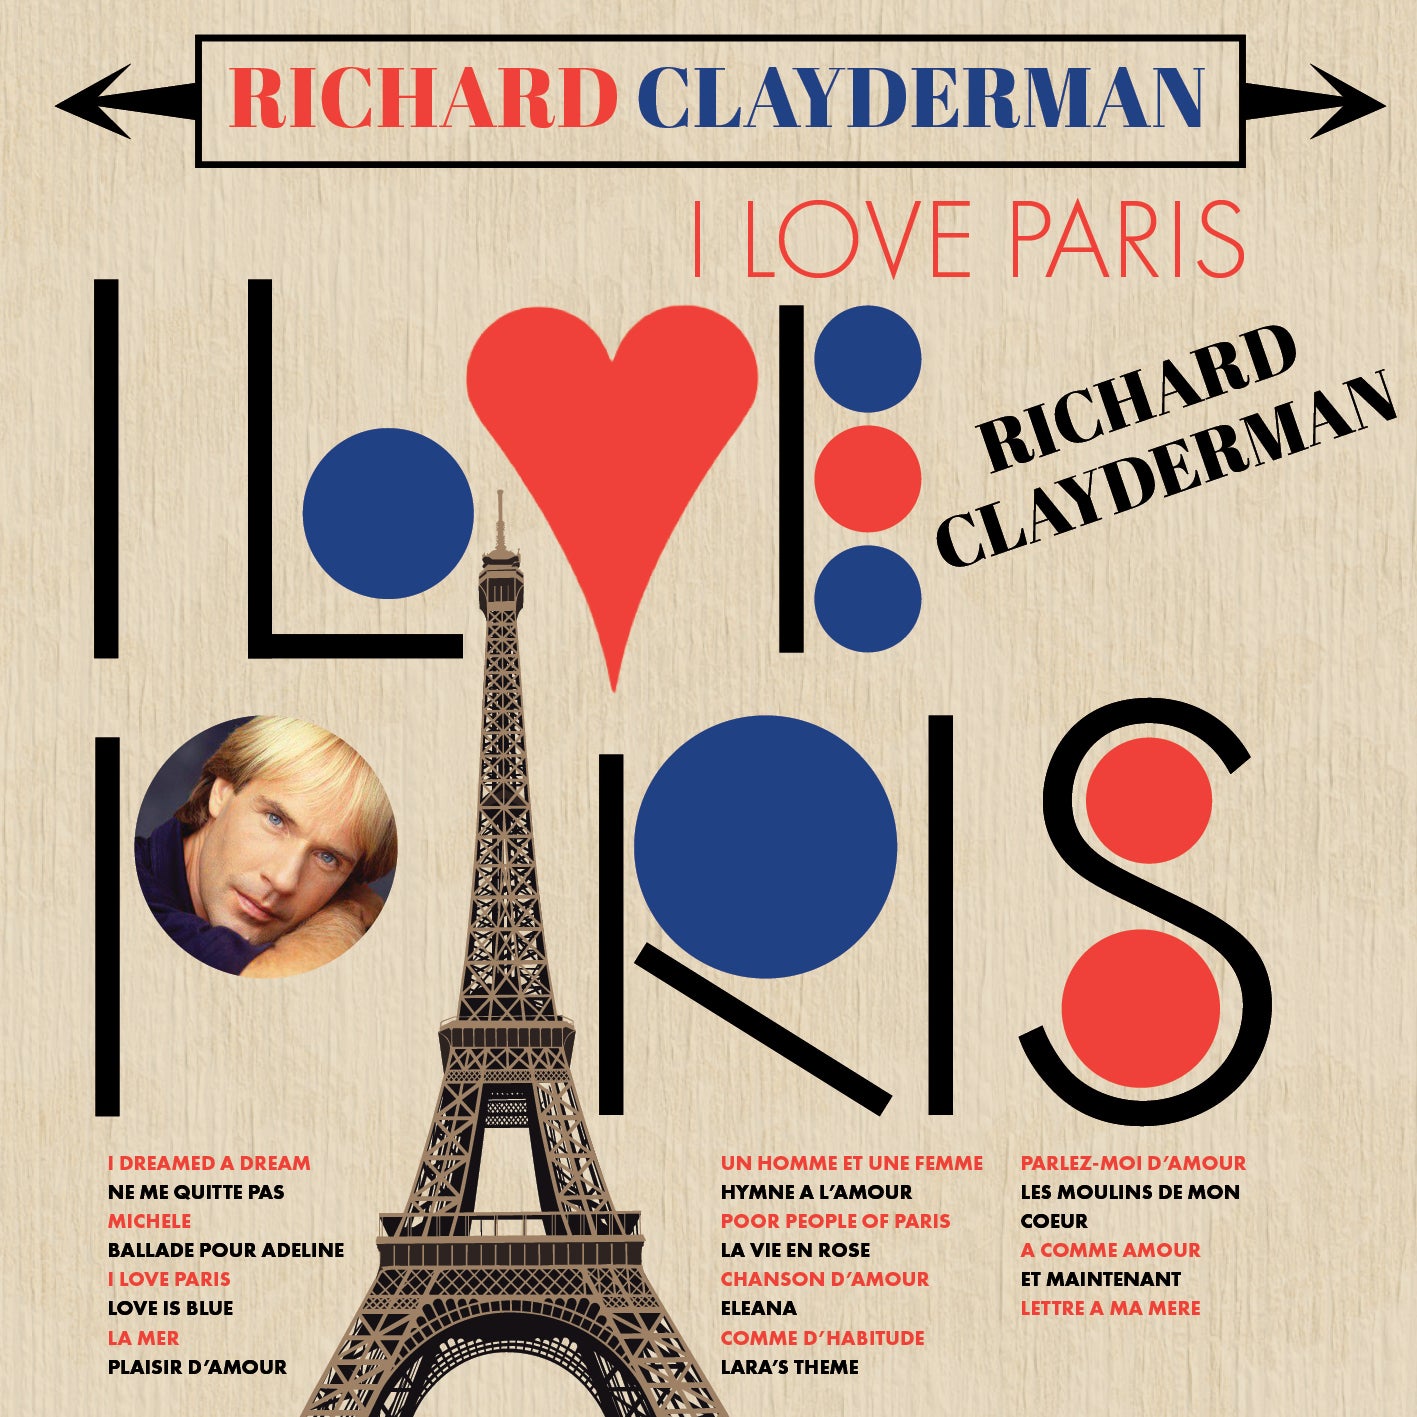 RICHARD CLAYDERMAN - I LOVE PARIS